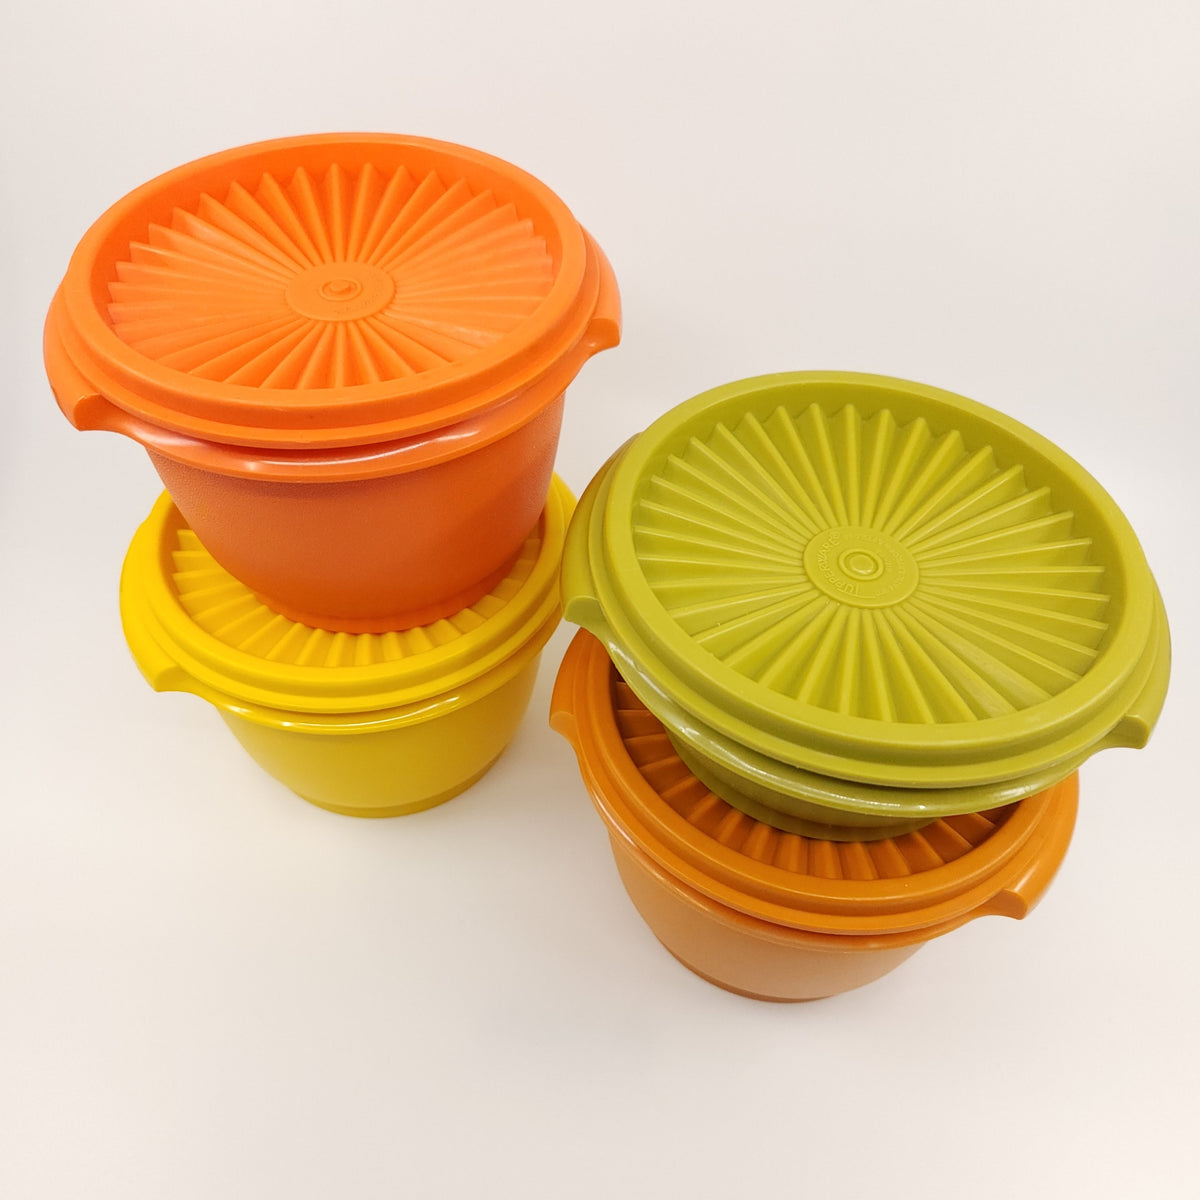 Retro 70s Tupperware containers & tumblers in harvest gold, orange, green